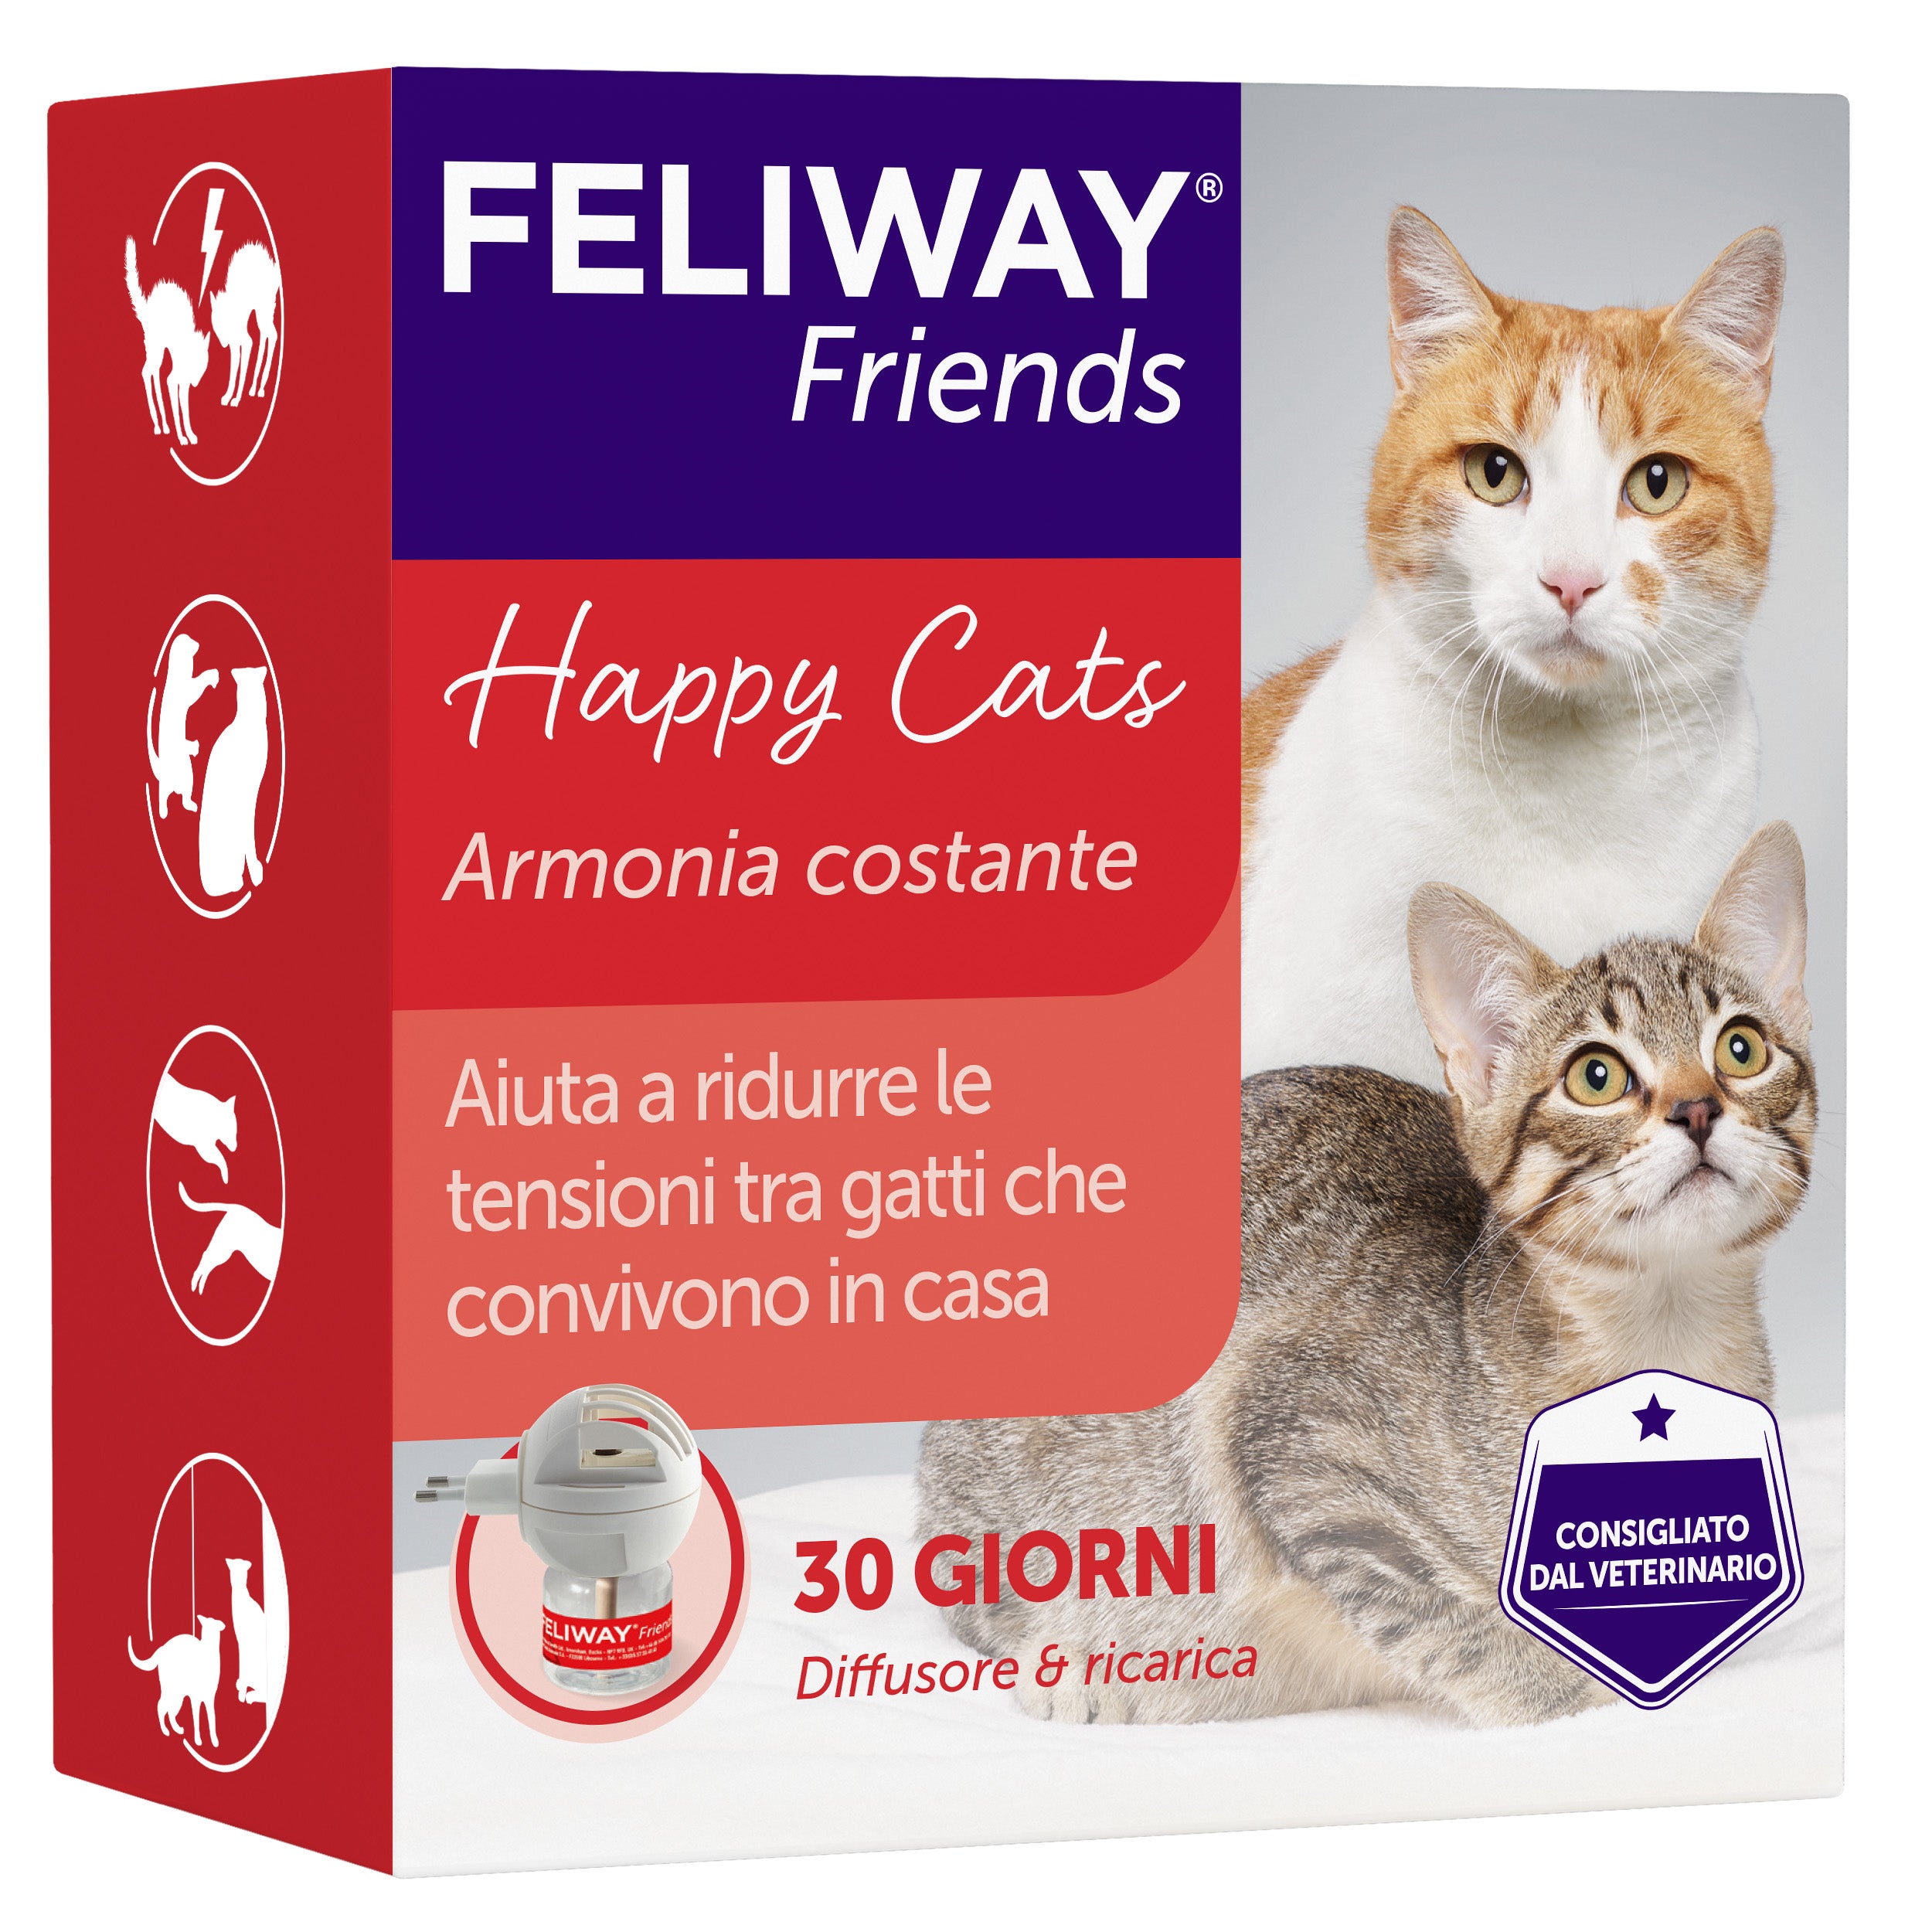 Feliway Friends Starter Kit: Acquista Ora